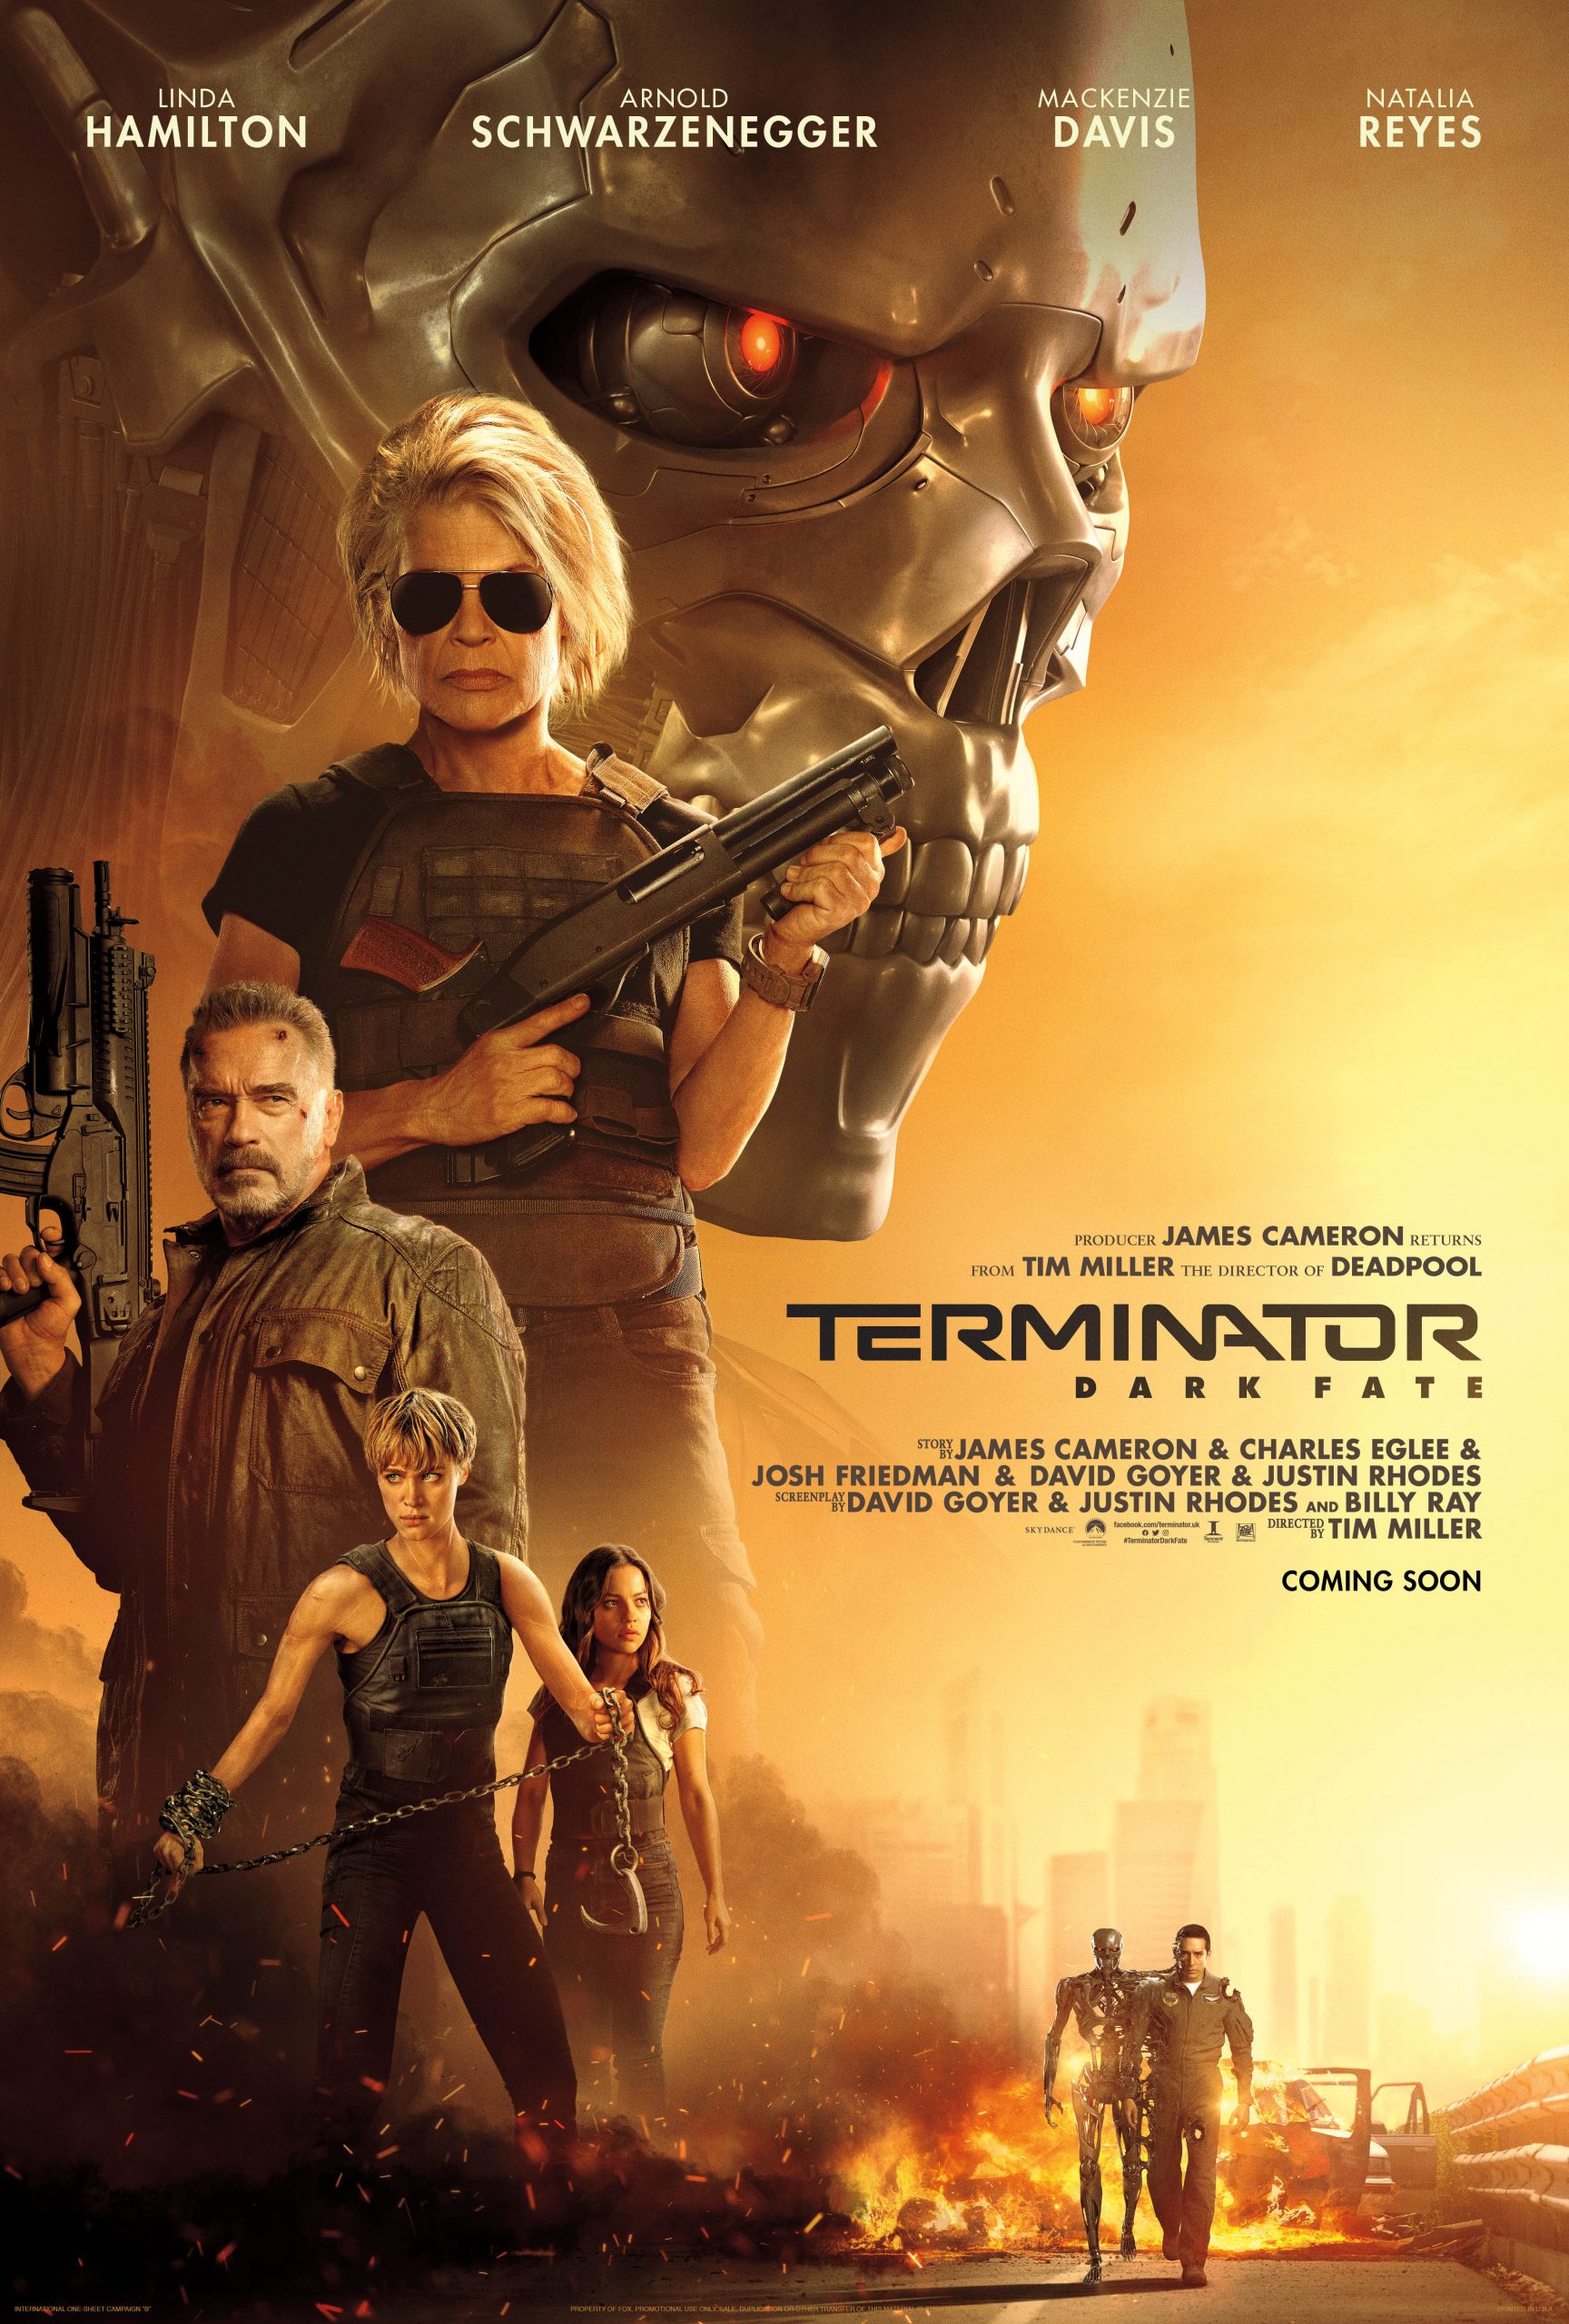 Terminator: Dark Fate (movie review: Mark Kermode).